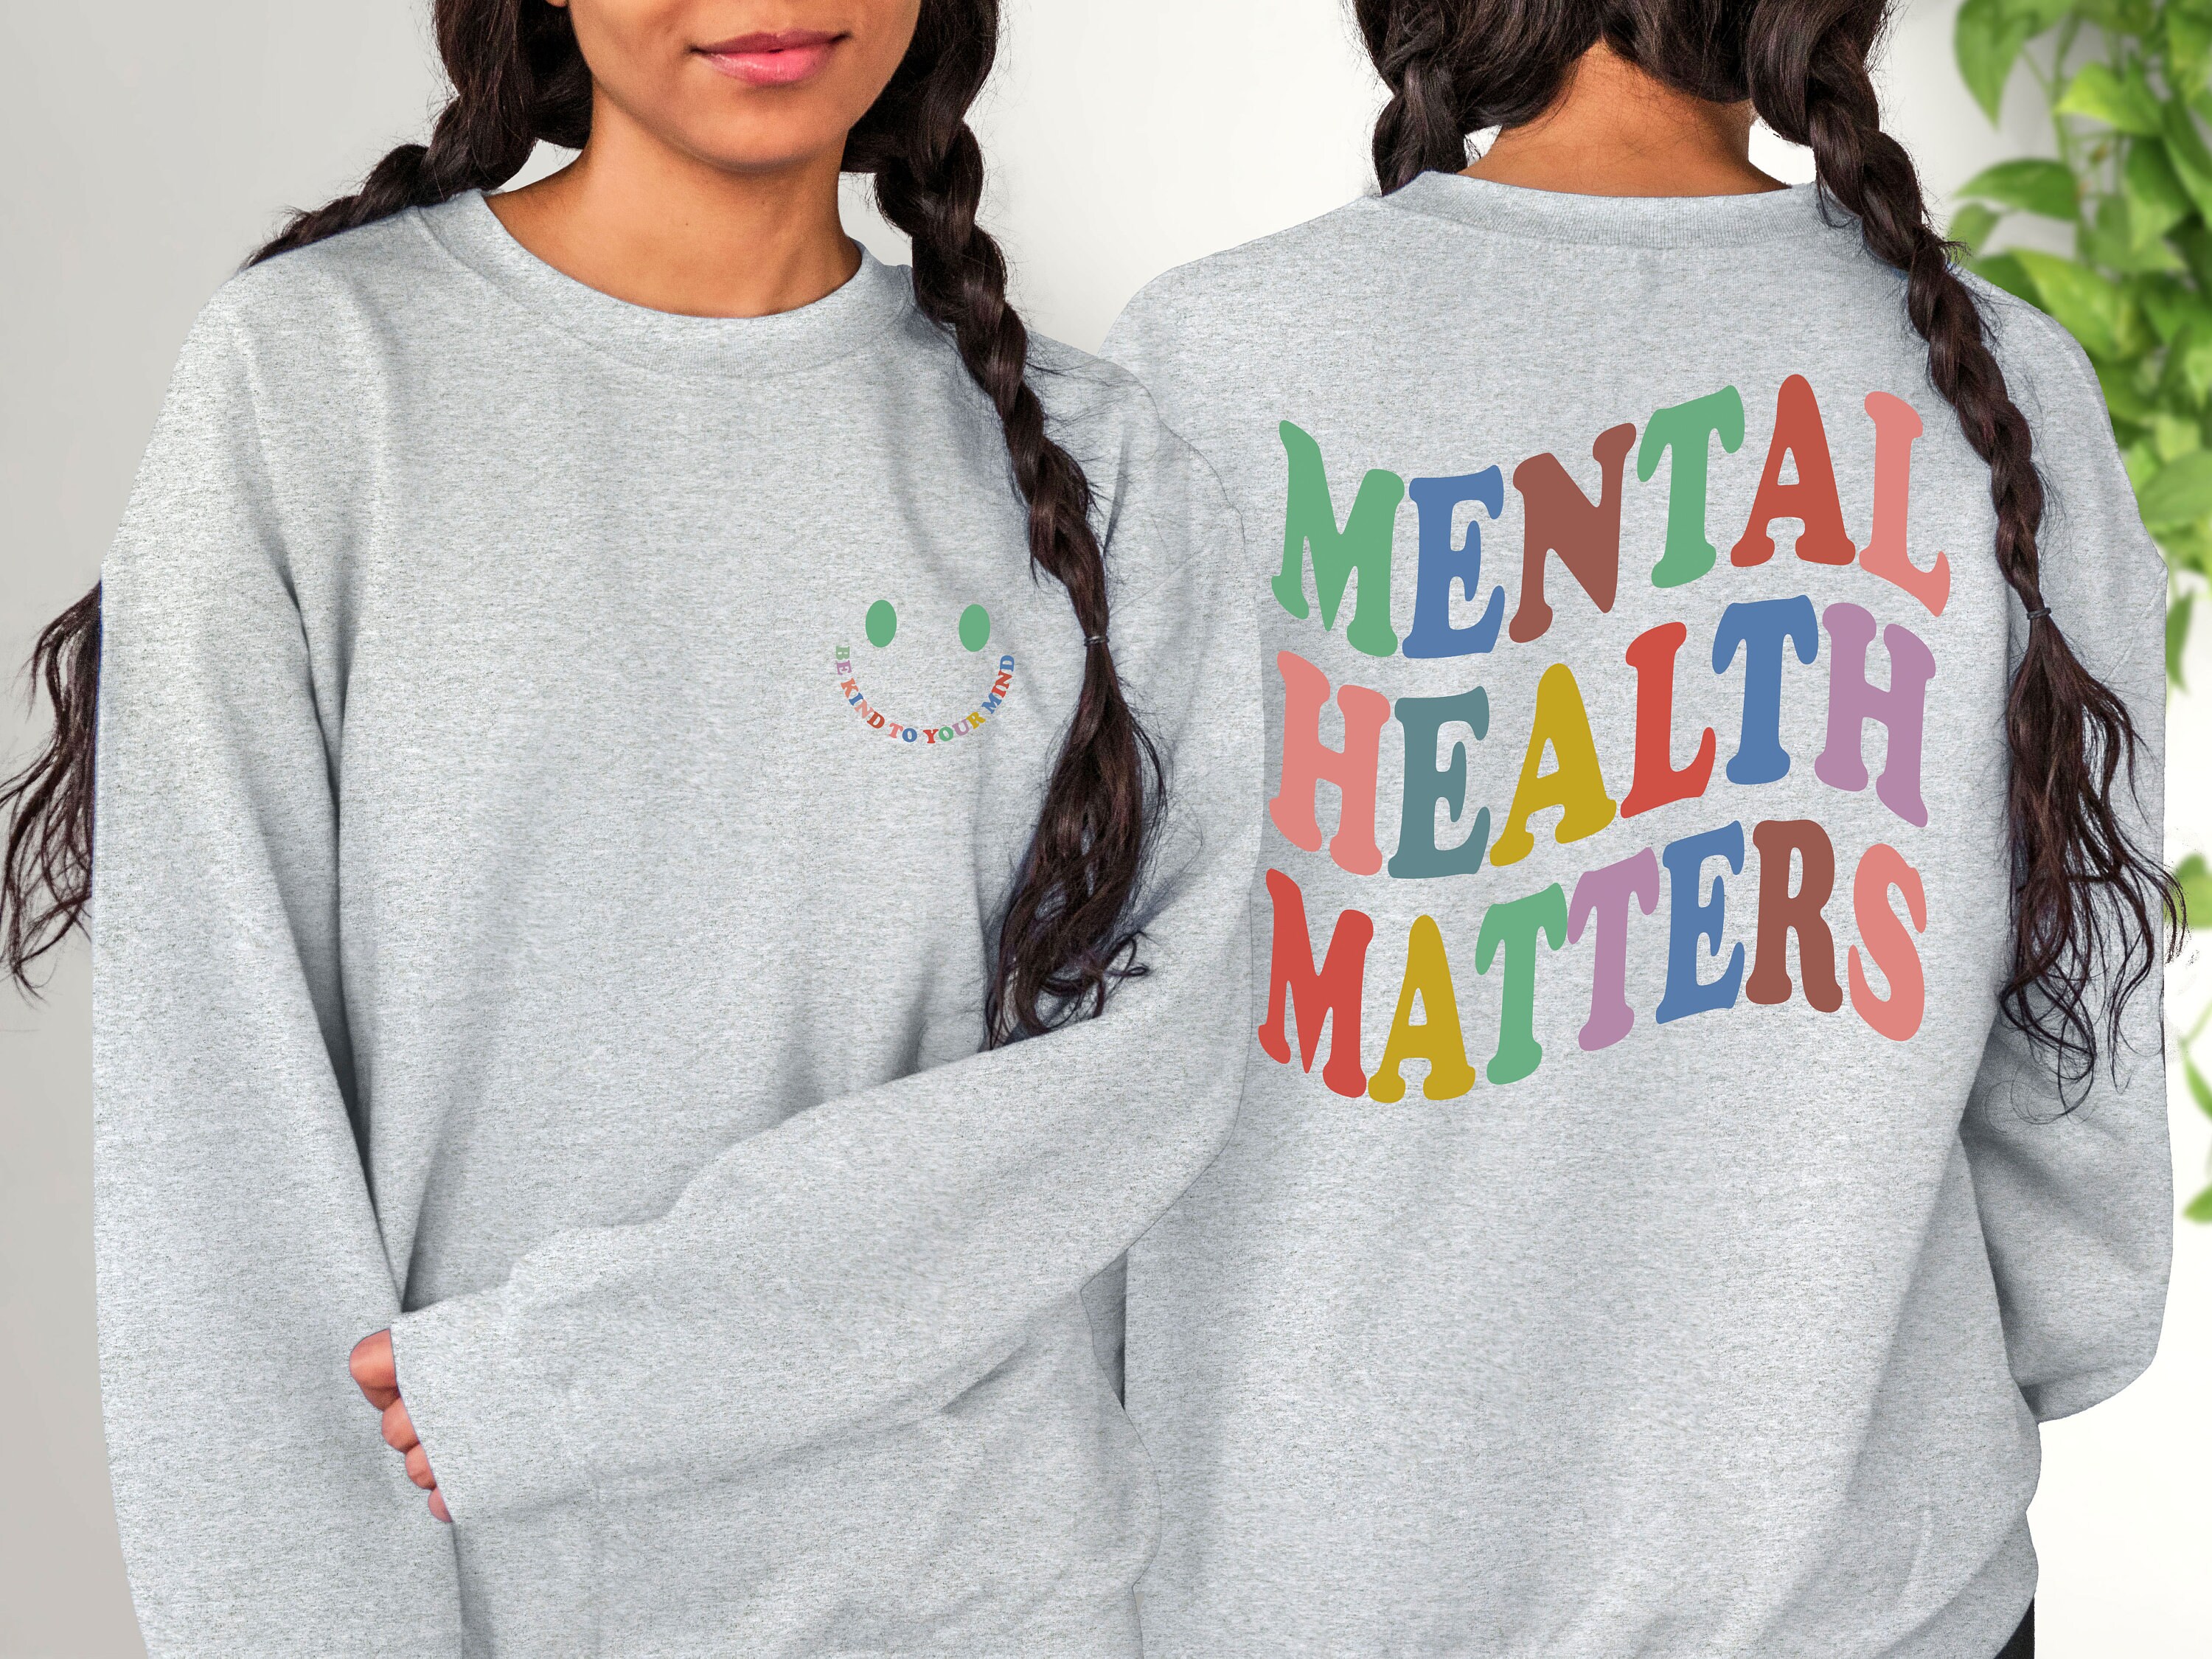 Discover Mental Health Matters Shirt, Mental Health Awareness Tee, Psychologist Tee, Groovy Therapist Shirt